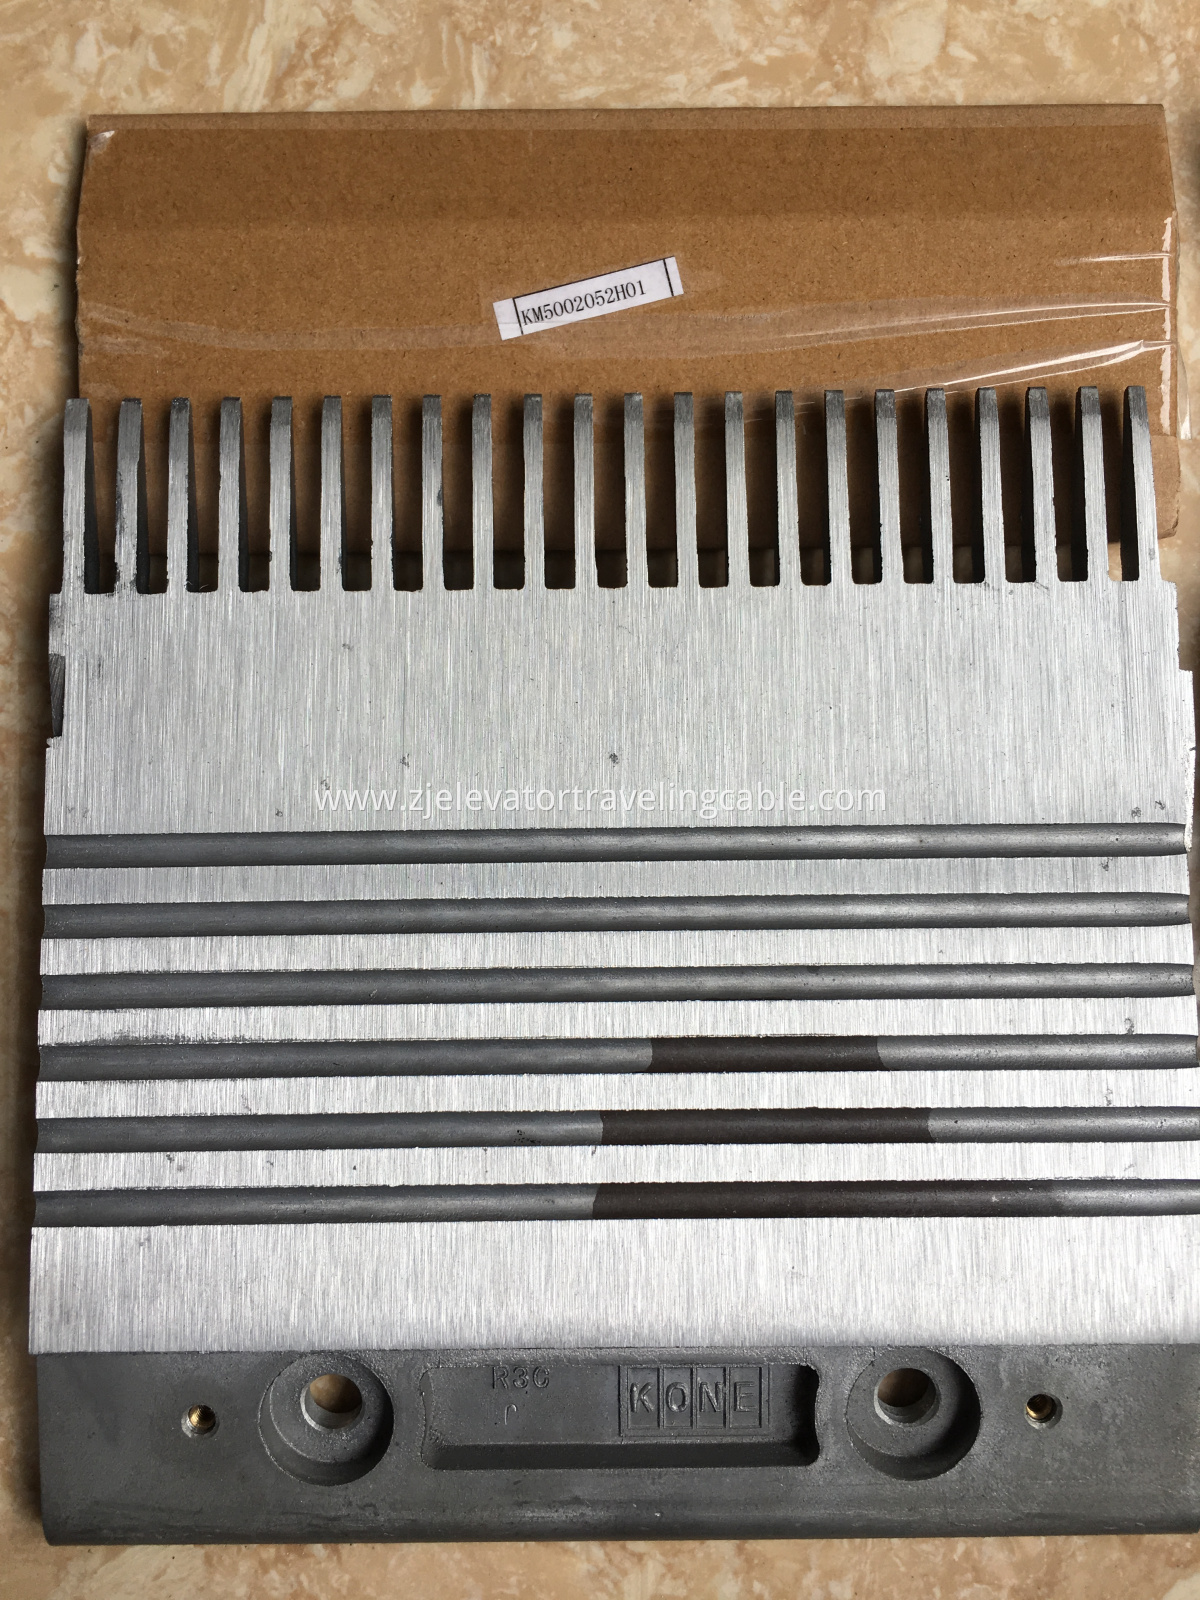 R3C Aluminium Alloy Combs for KONE Escalators, Center